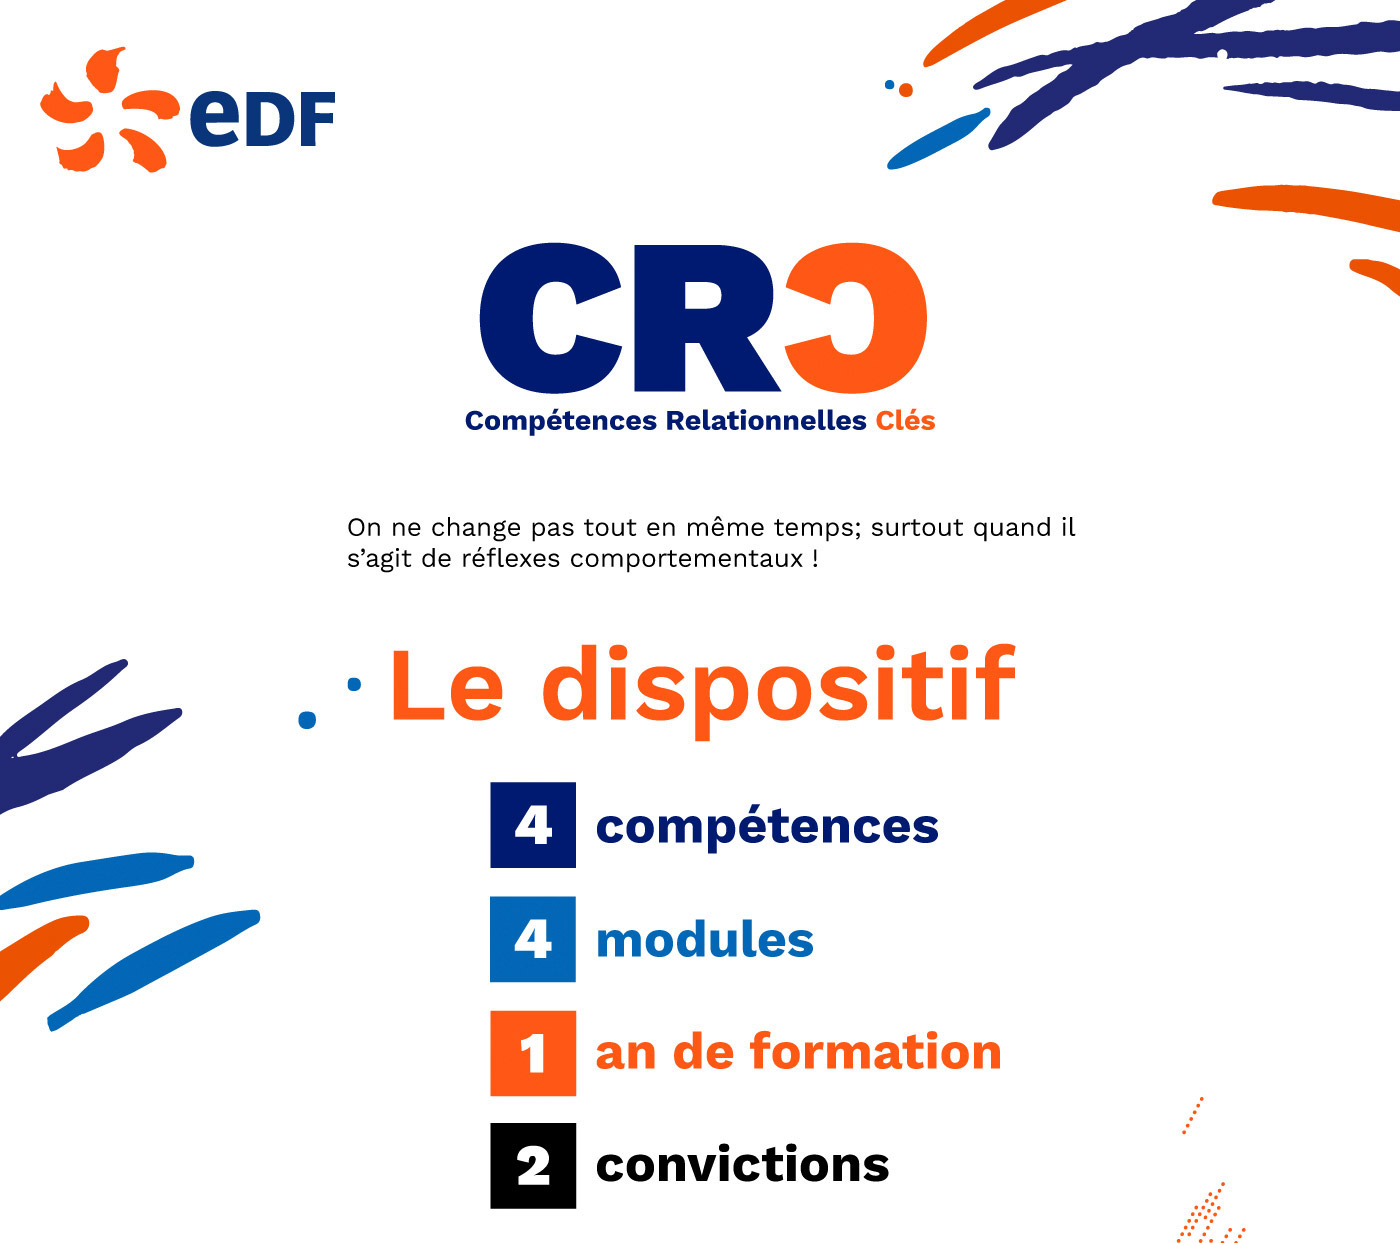 01 EDF creation infographie formation raphiste savoie chambery